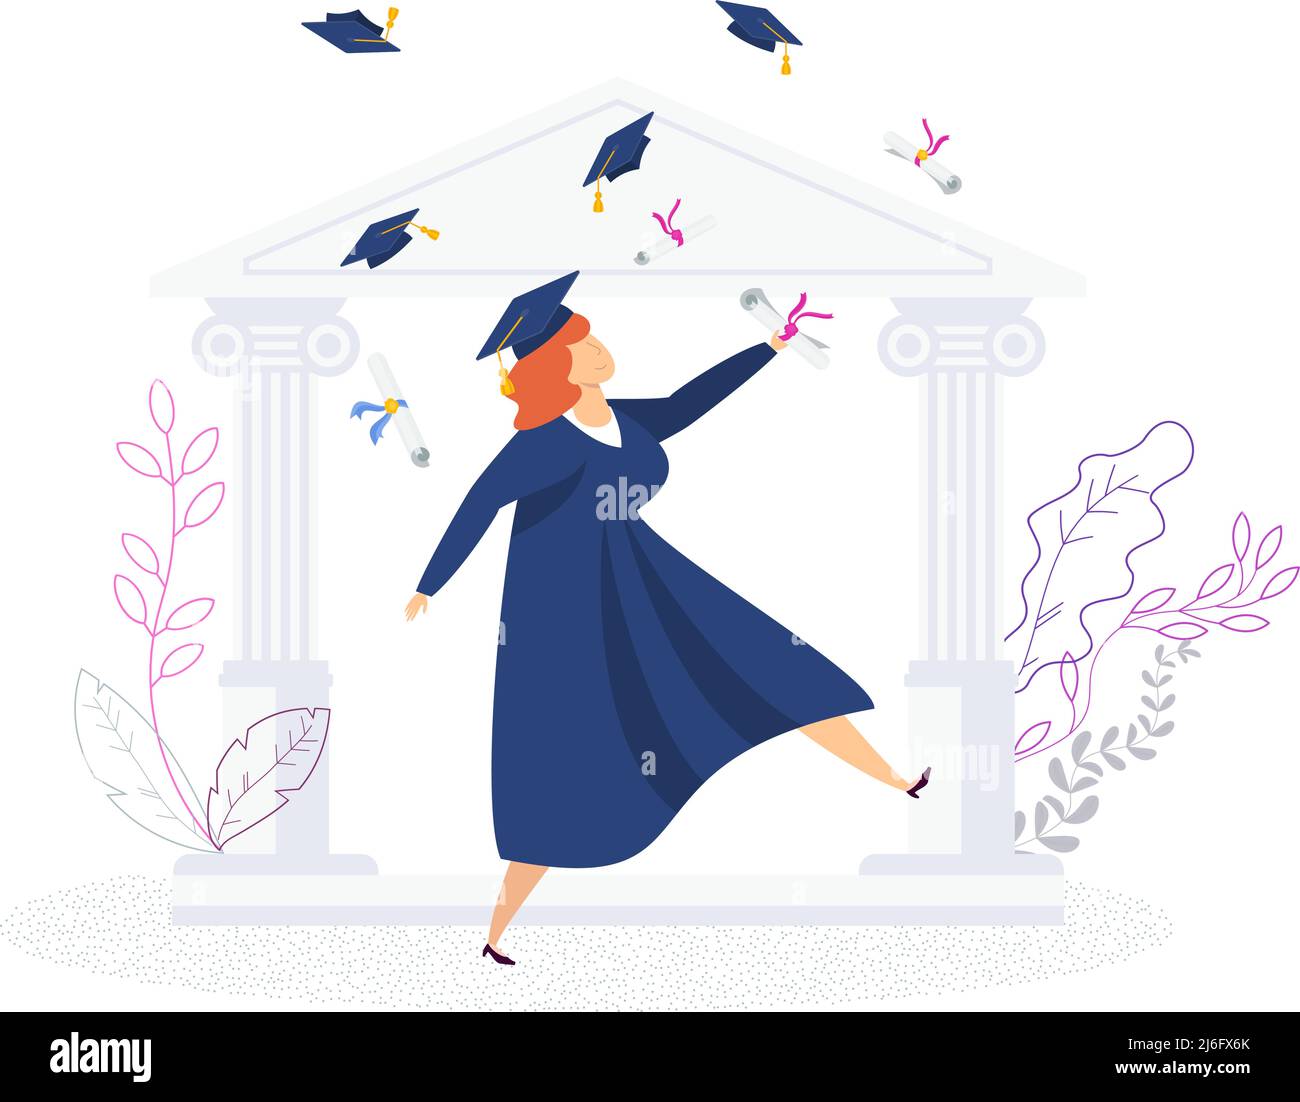 University graduates celebrate graduation. Graduation gown. Student party. Stock Vector